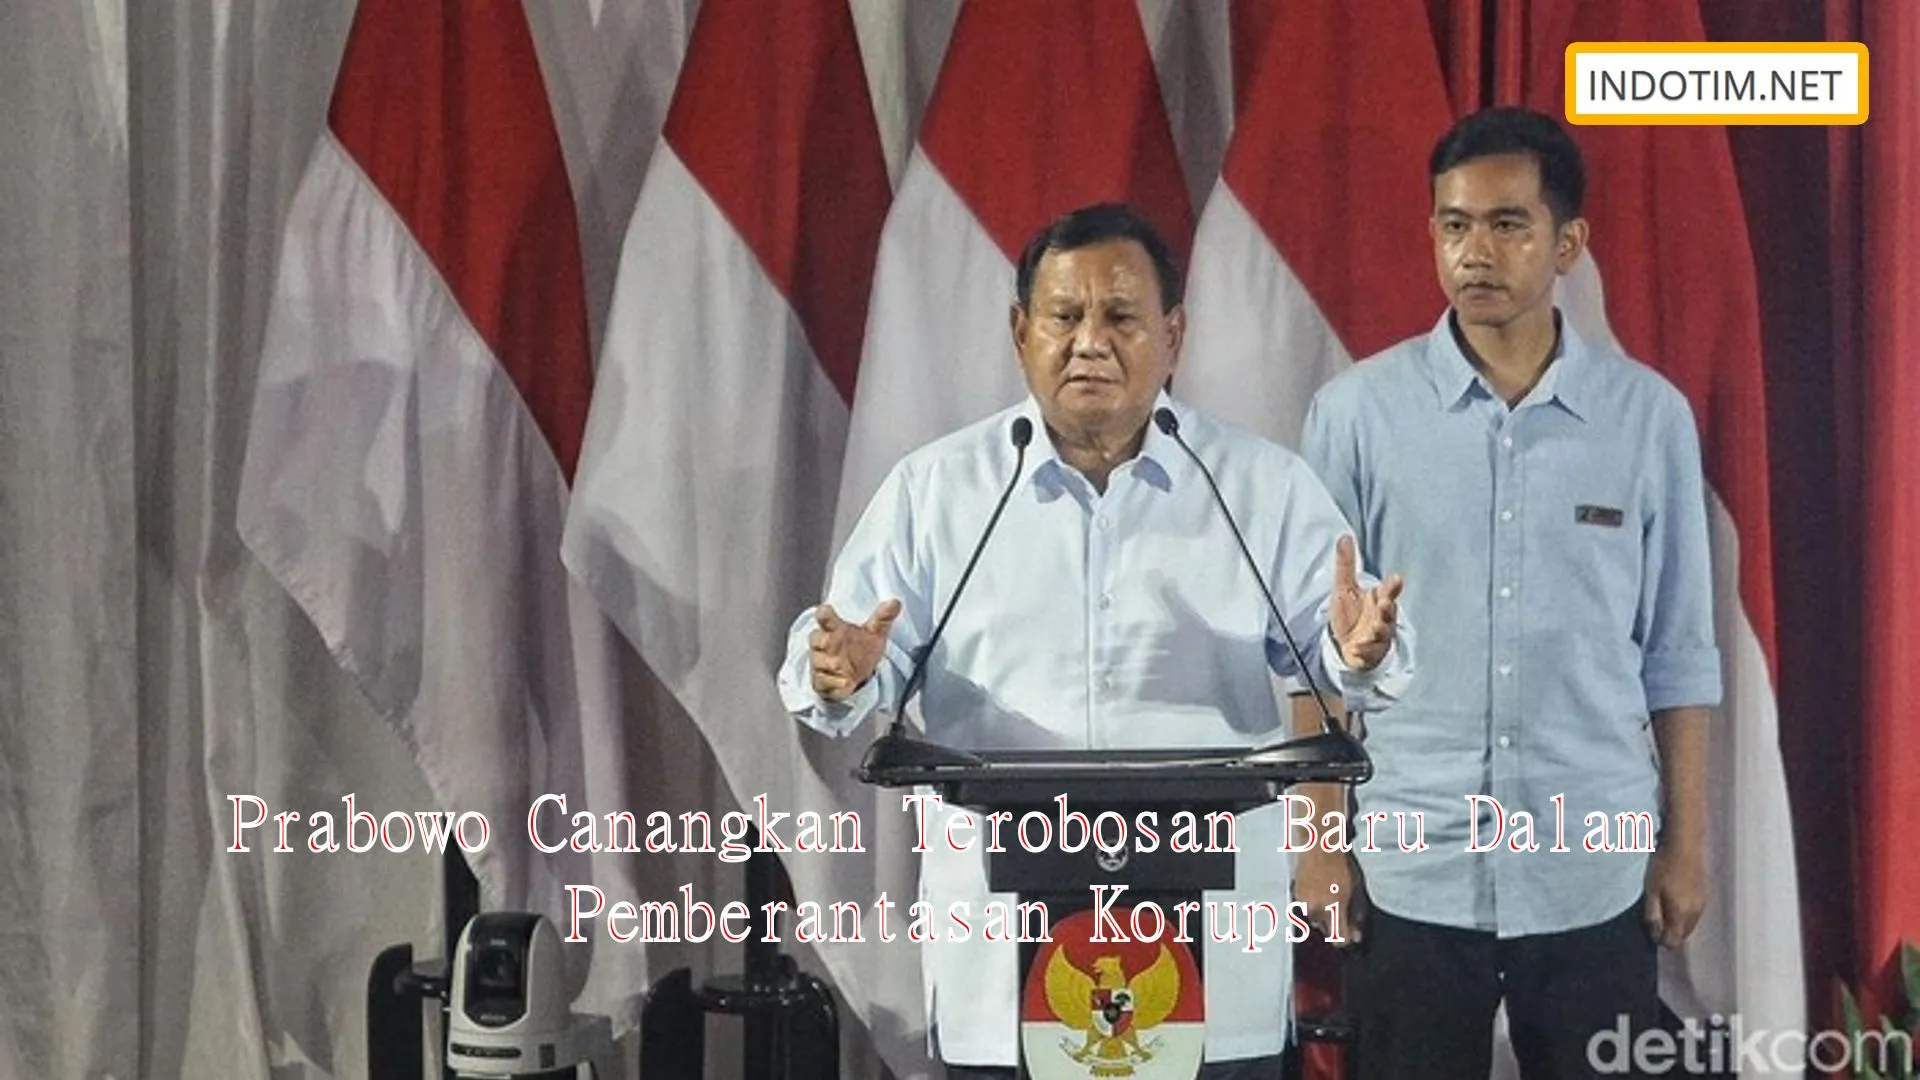 Prabowo Canangkan Terobosan Baru Dalam Pemberantasan Korupsi